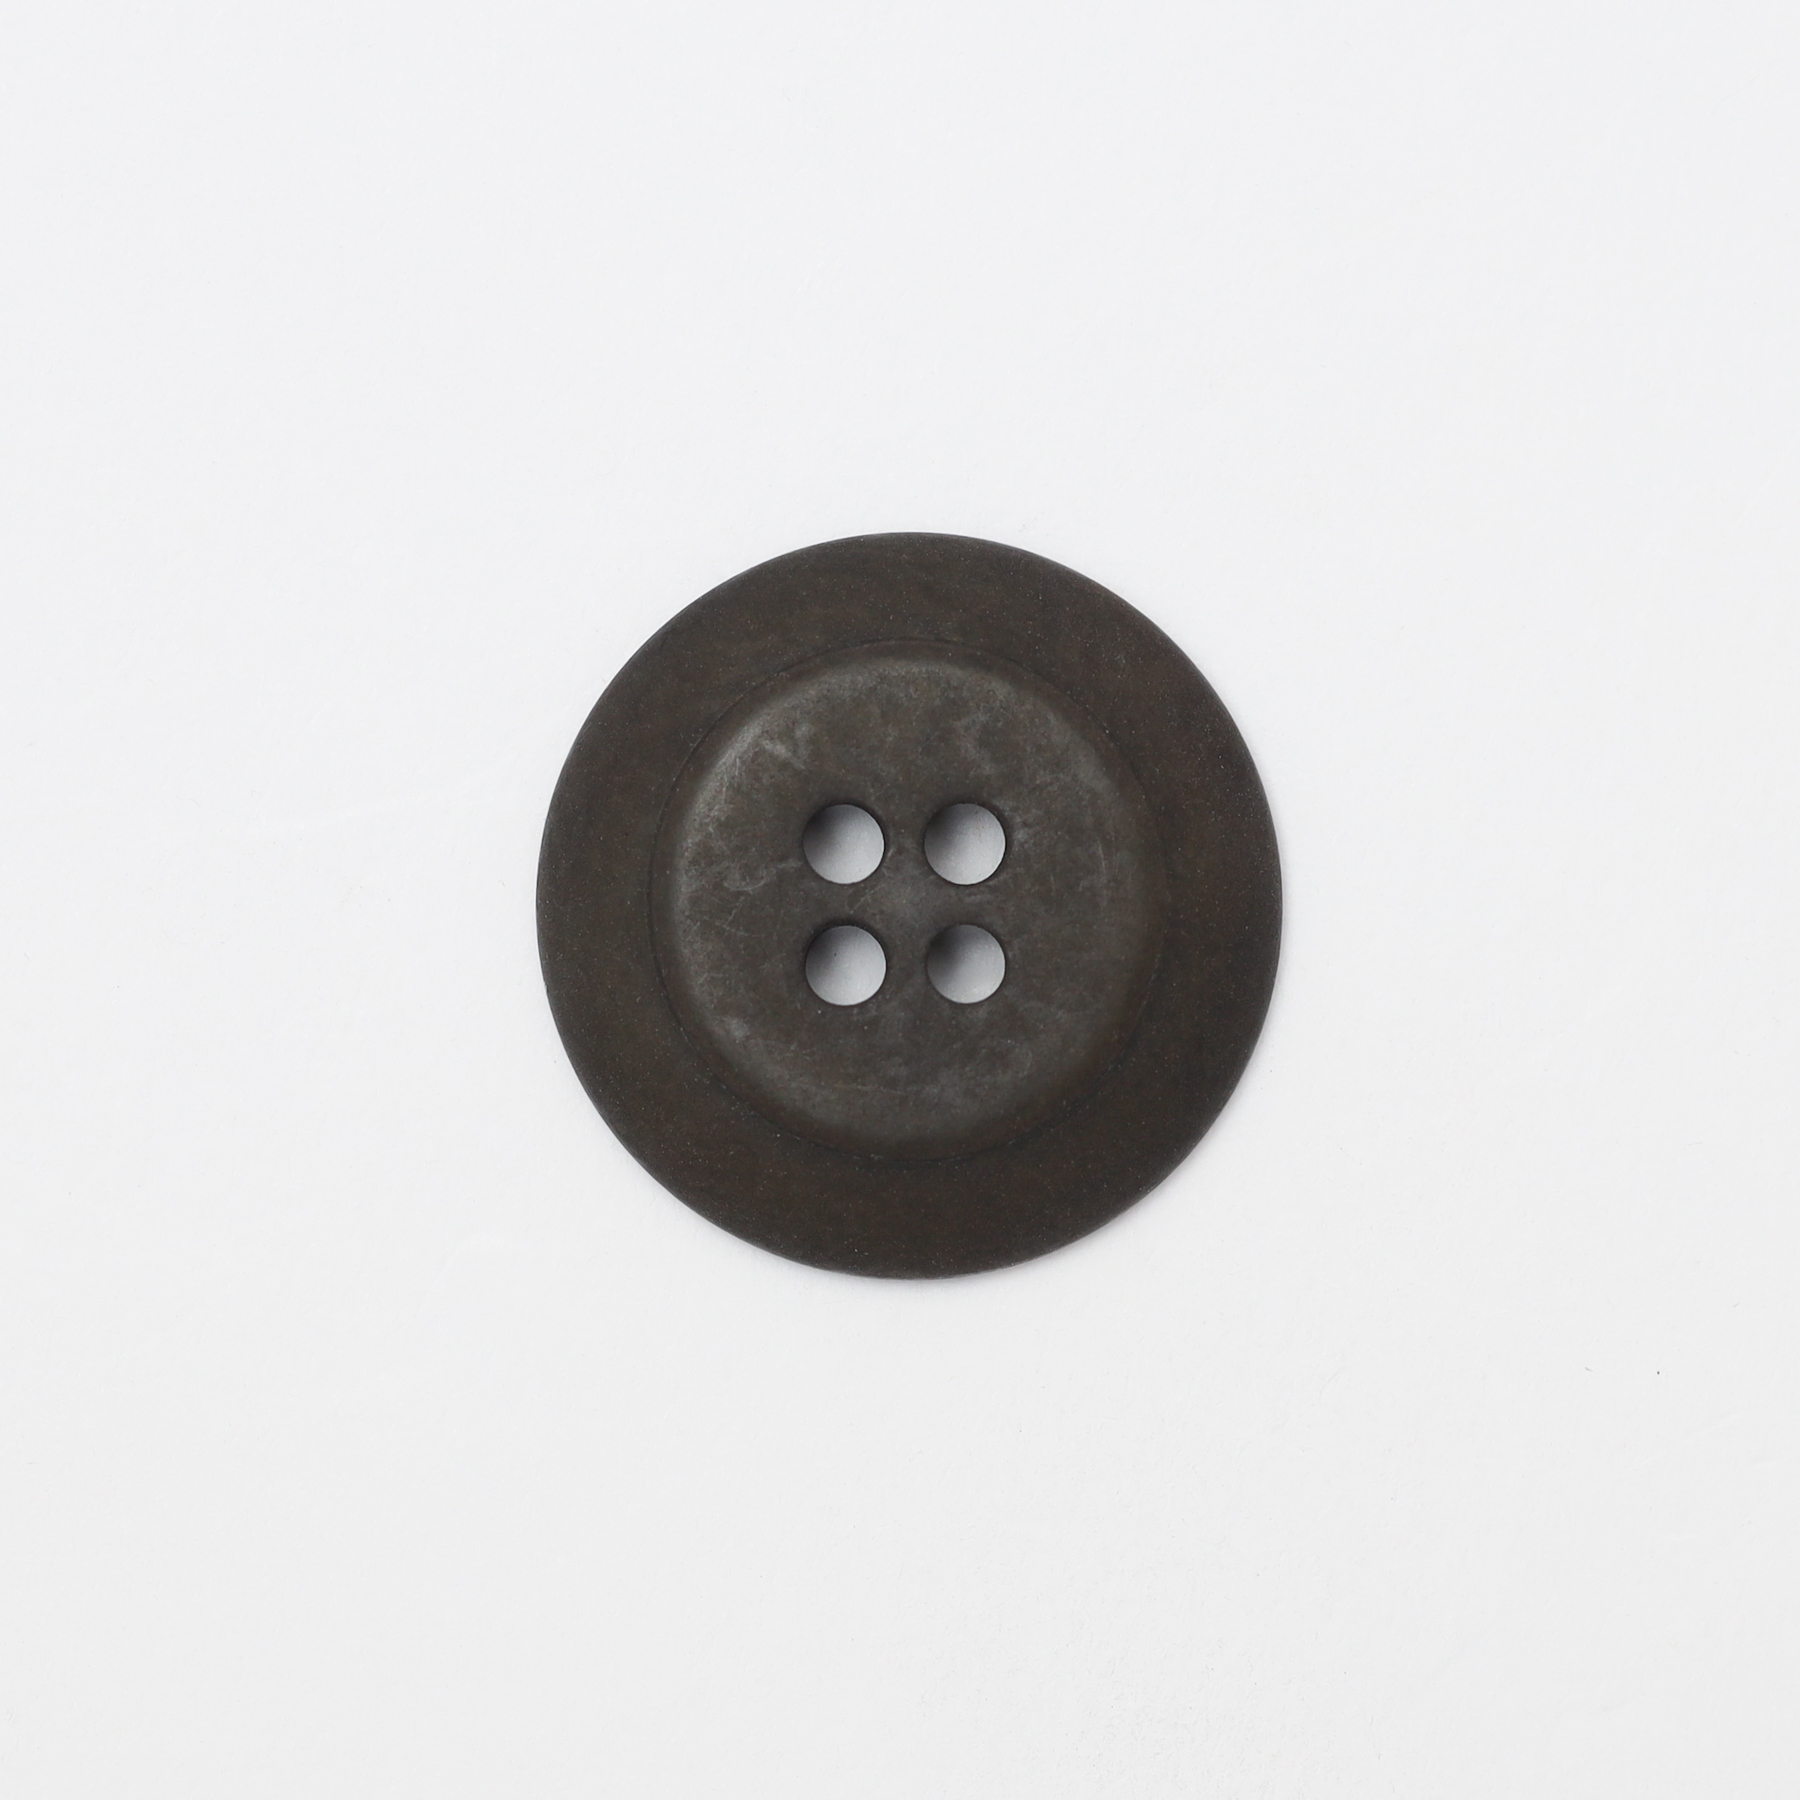 Khaki Corozo Buttons 22mm